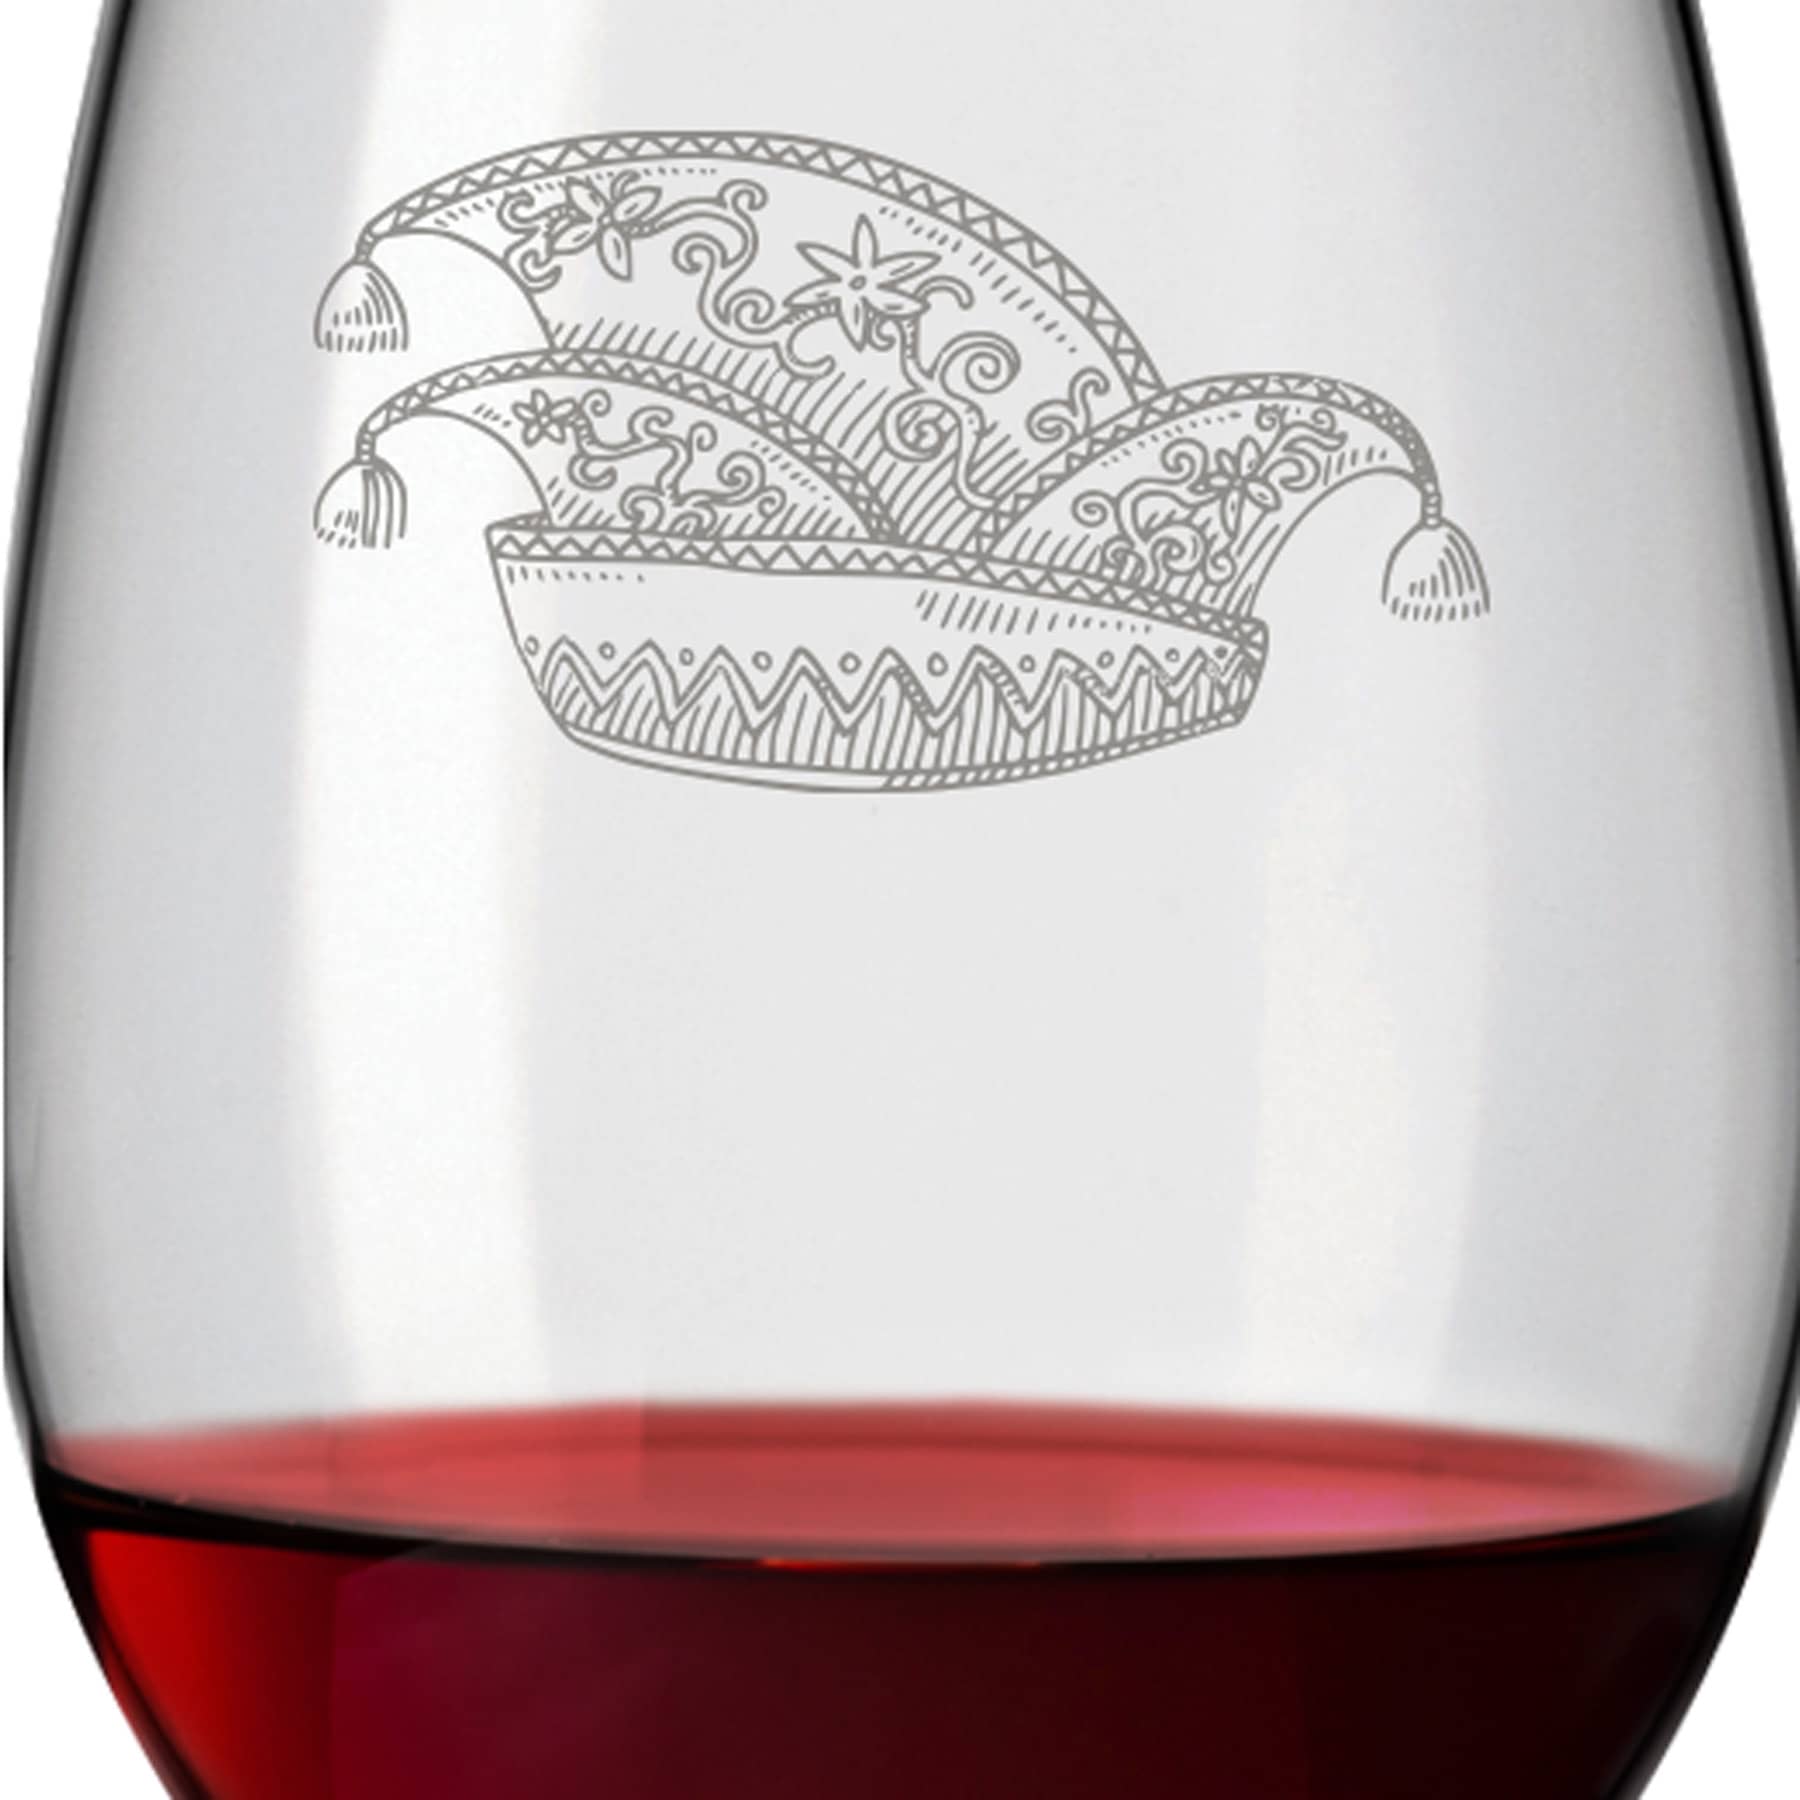 Leonardo Bordeauxglas Rotweinglas DAILY 640ml mit Namen oder Wunschtext graviert (Karnevalskappe)